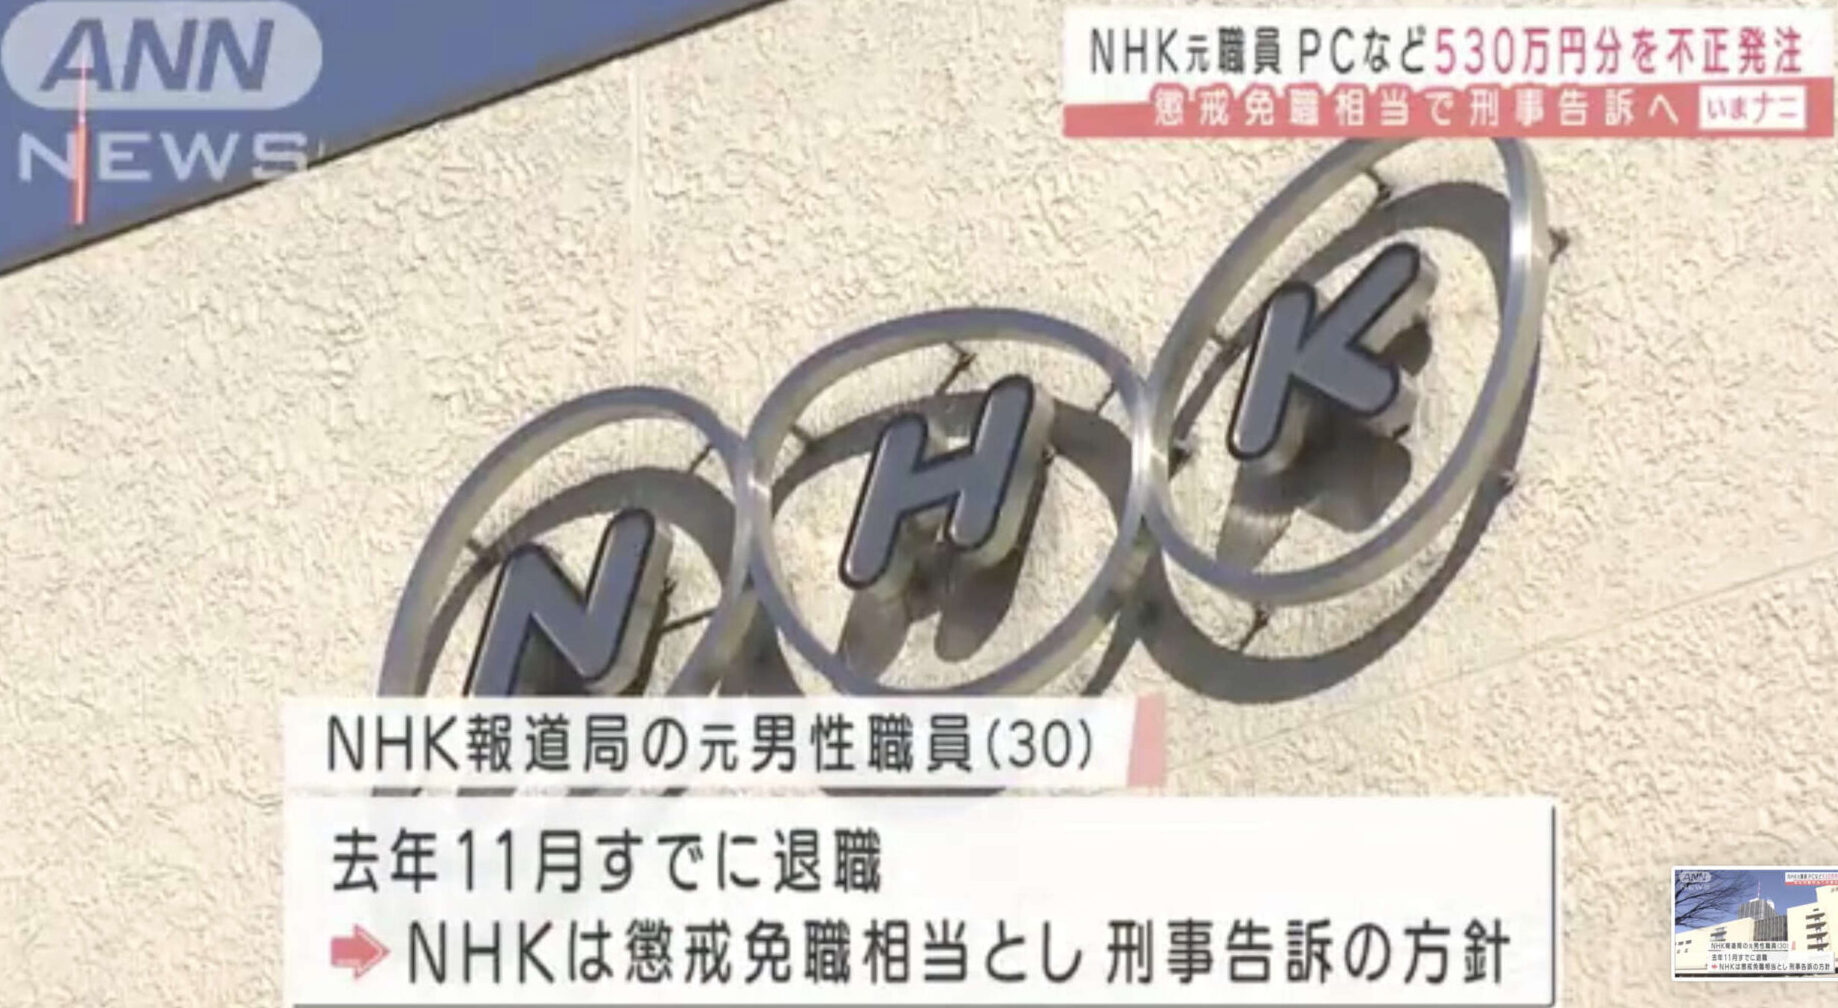 NHKの元職員がパソコンの無断発注で現金を詐取した業務上横領